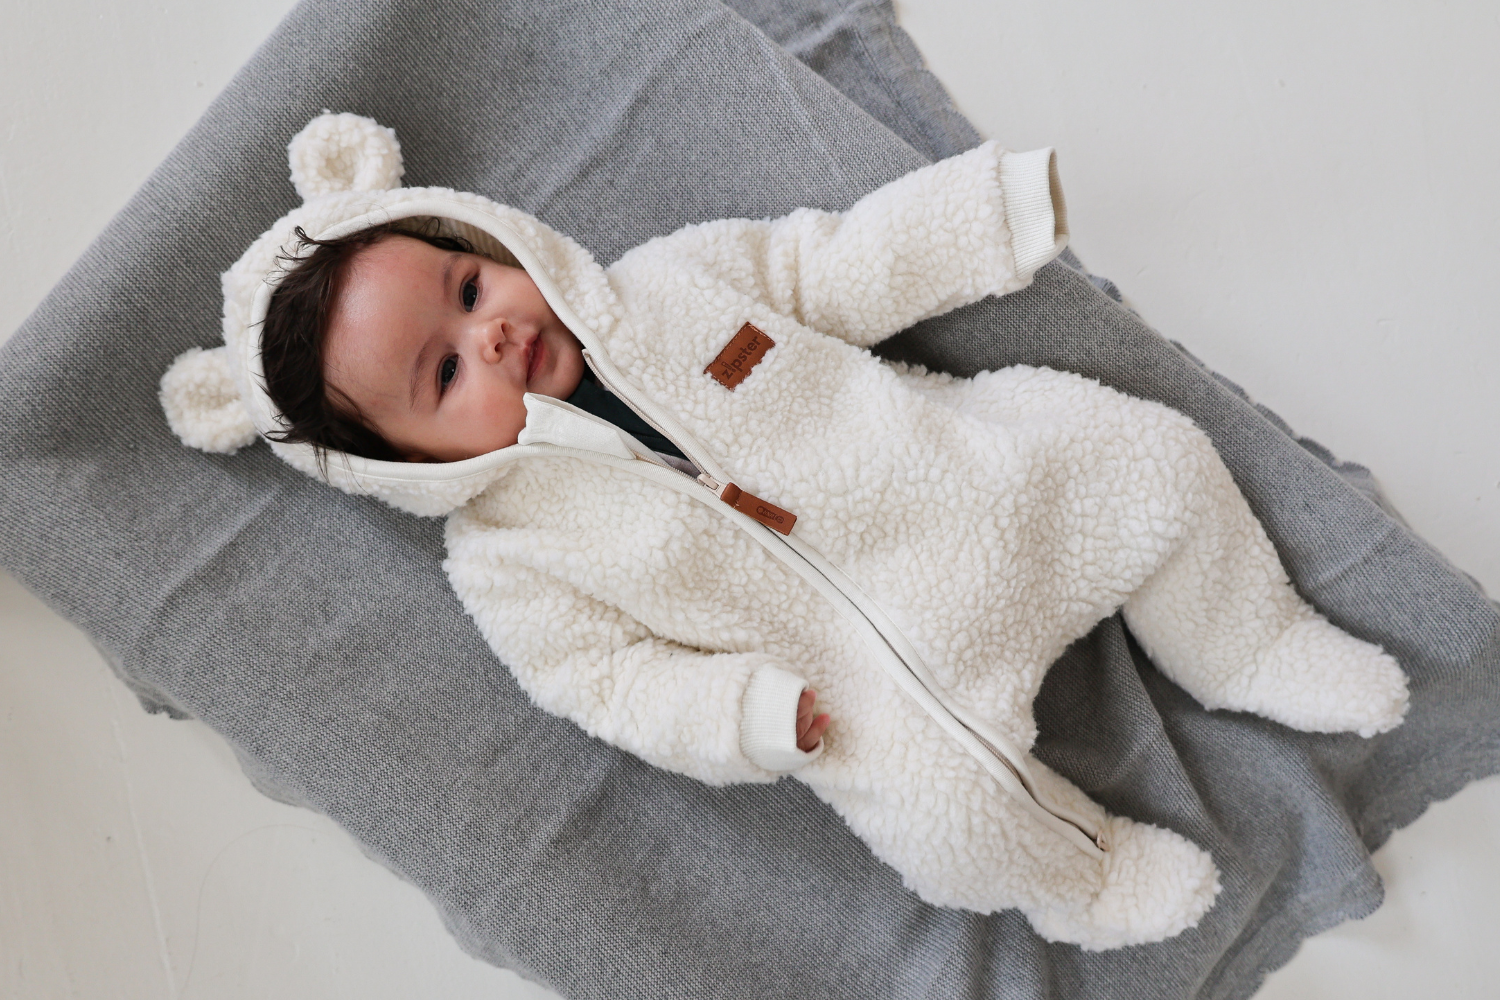 How to Dress a Newborn in Winter